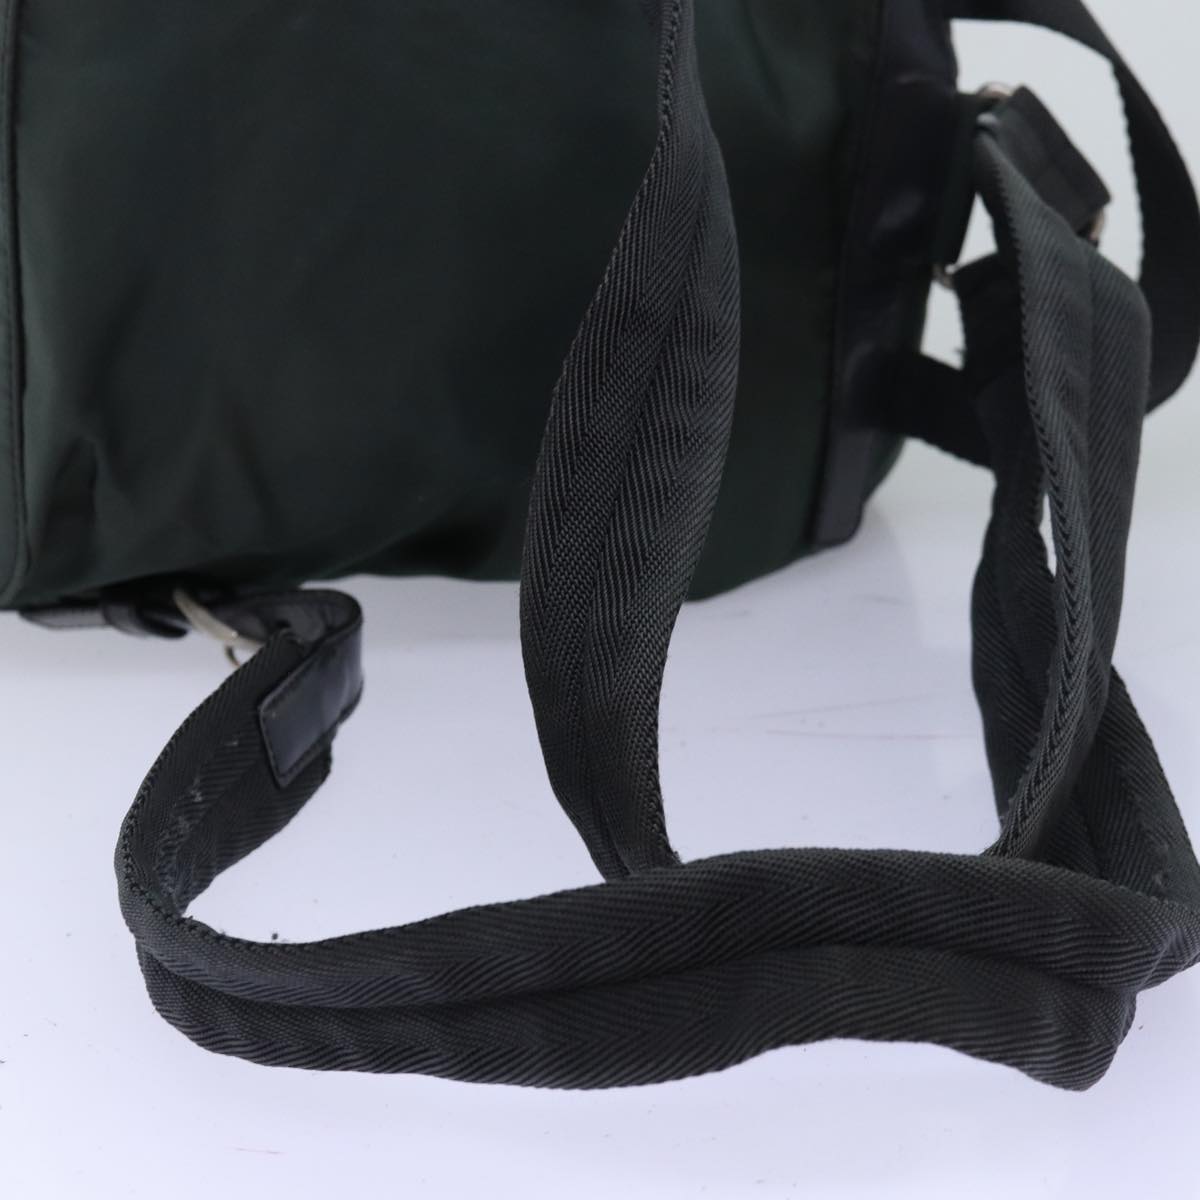 PRADA Backpack Nylon Green Auth 73875